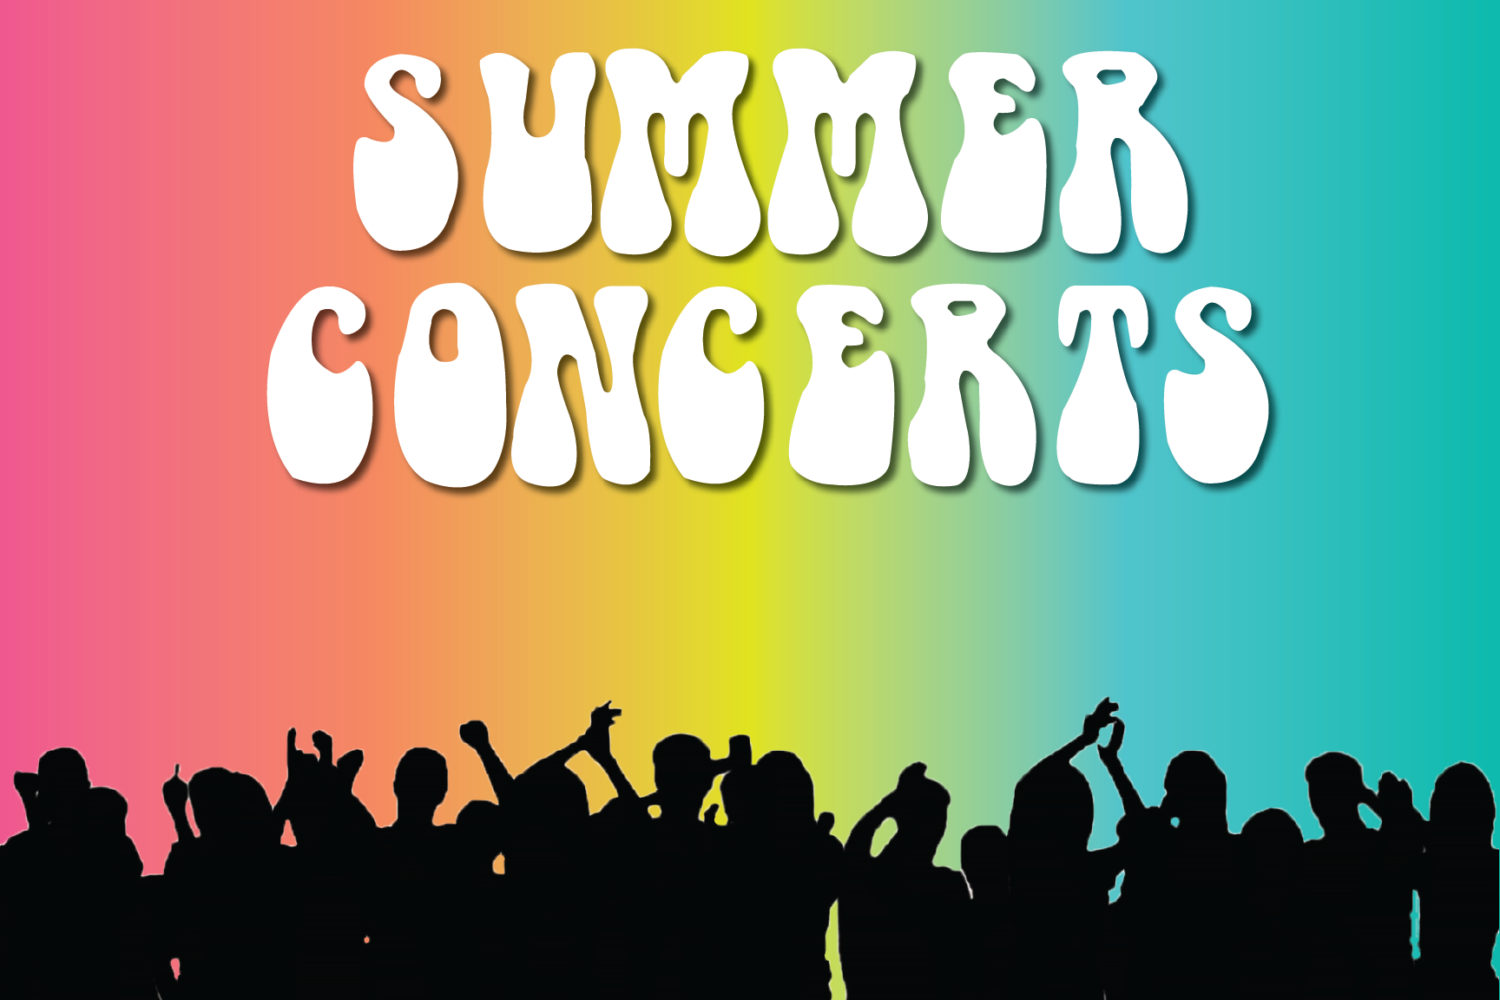 Summer Concerts